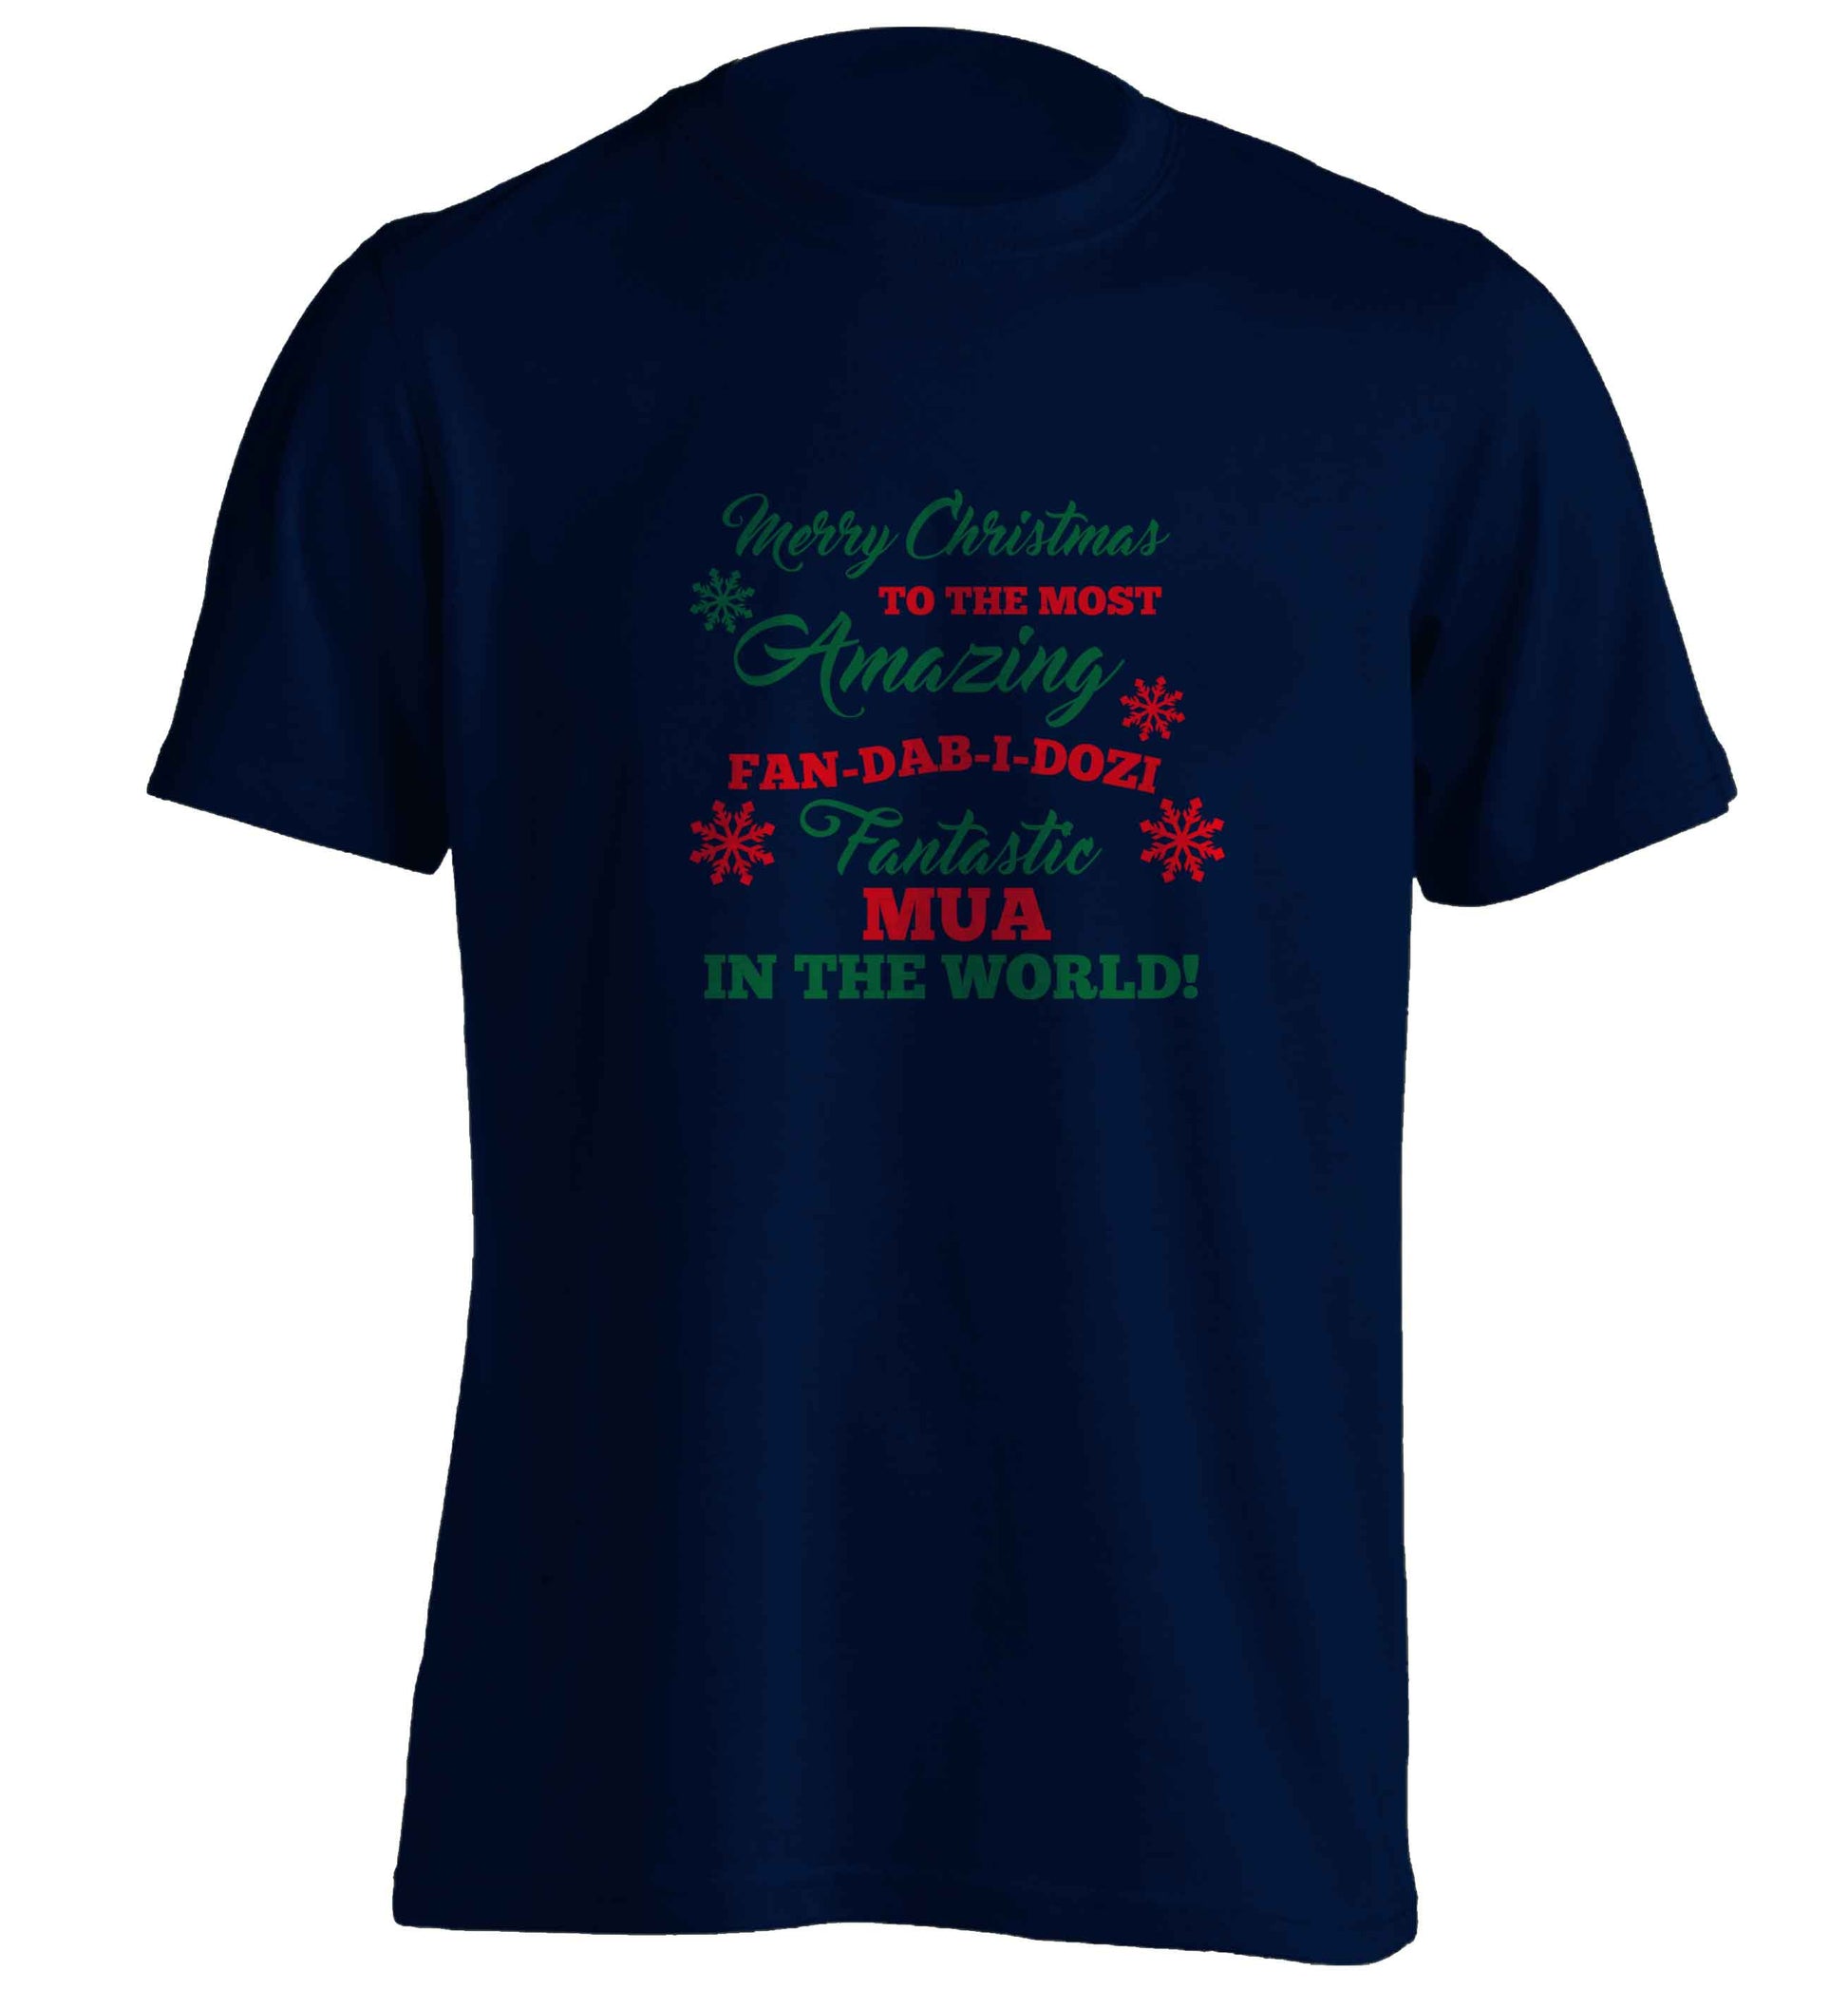 Merry Christmas to the most amazing fan-dab-i-dozi fantasic MUA in the world adults unisex navy Tshirt 2XL